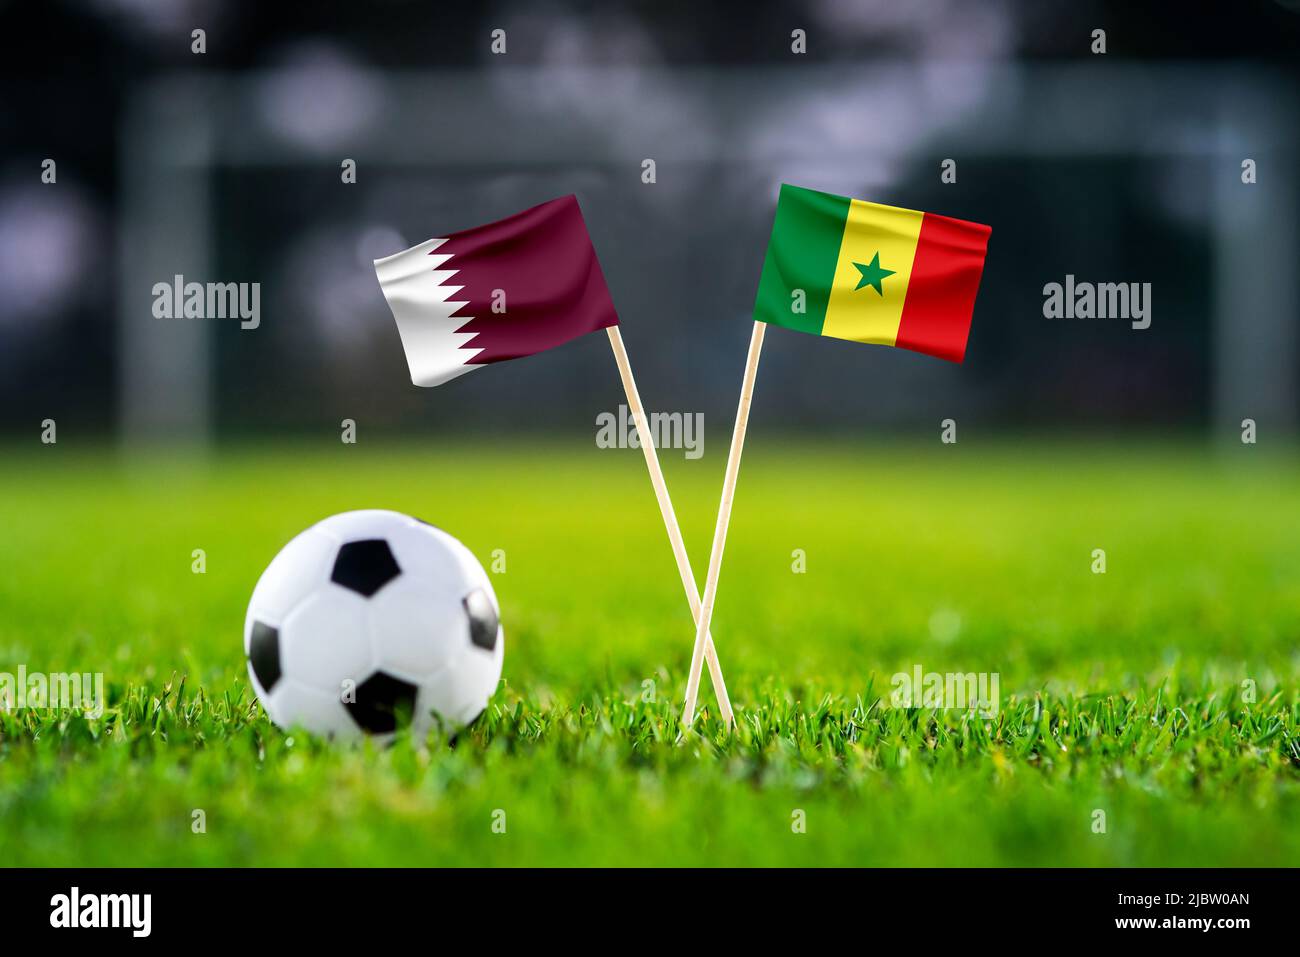 Qatar vs. Senegal, Al Thumama, Football match wallpaper, Handmade national flags and soccer ball on green grass. Football stadium in background. Black Stock Photo